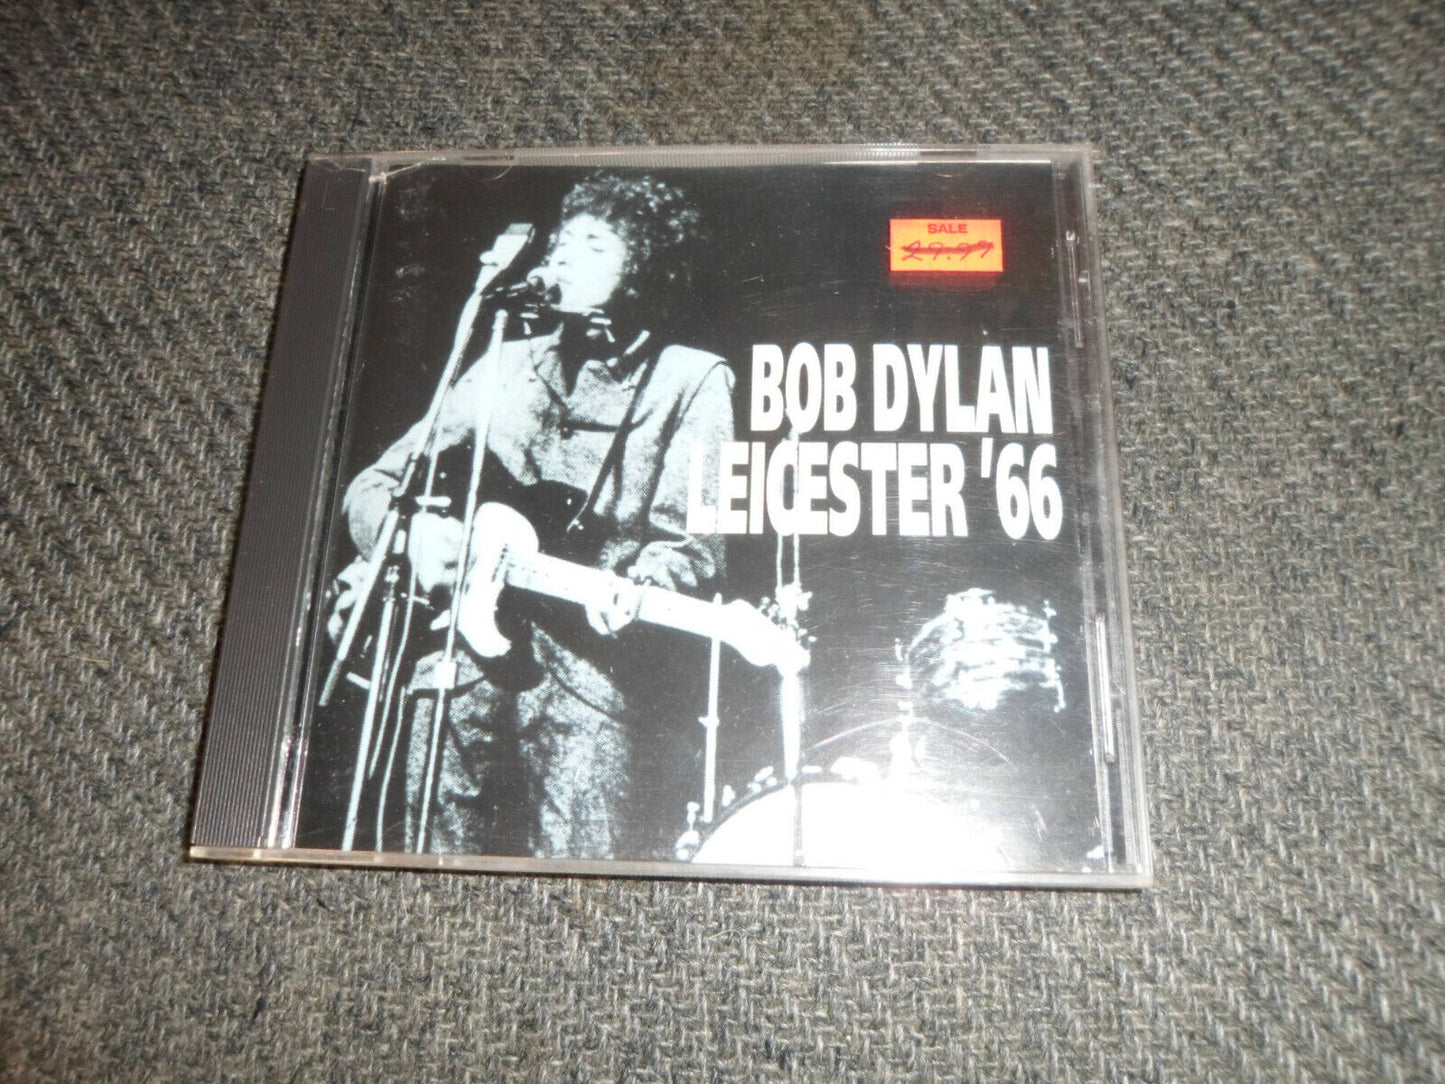 Live CD Bob Dylan Leicester 1966